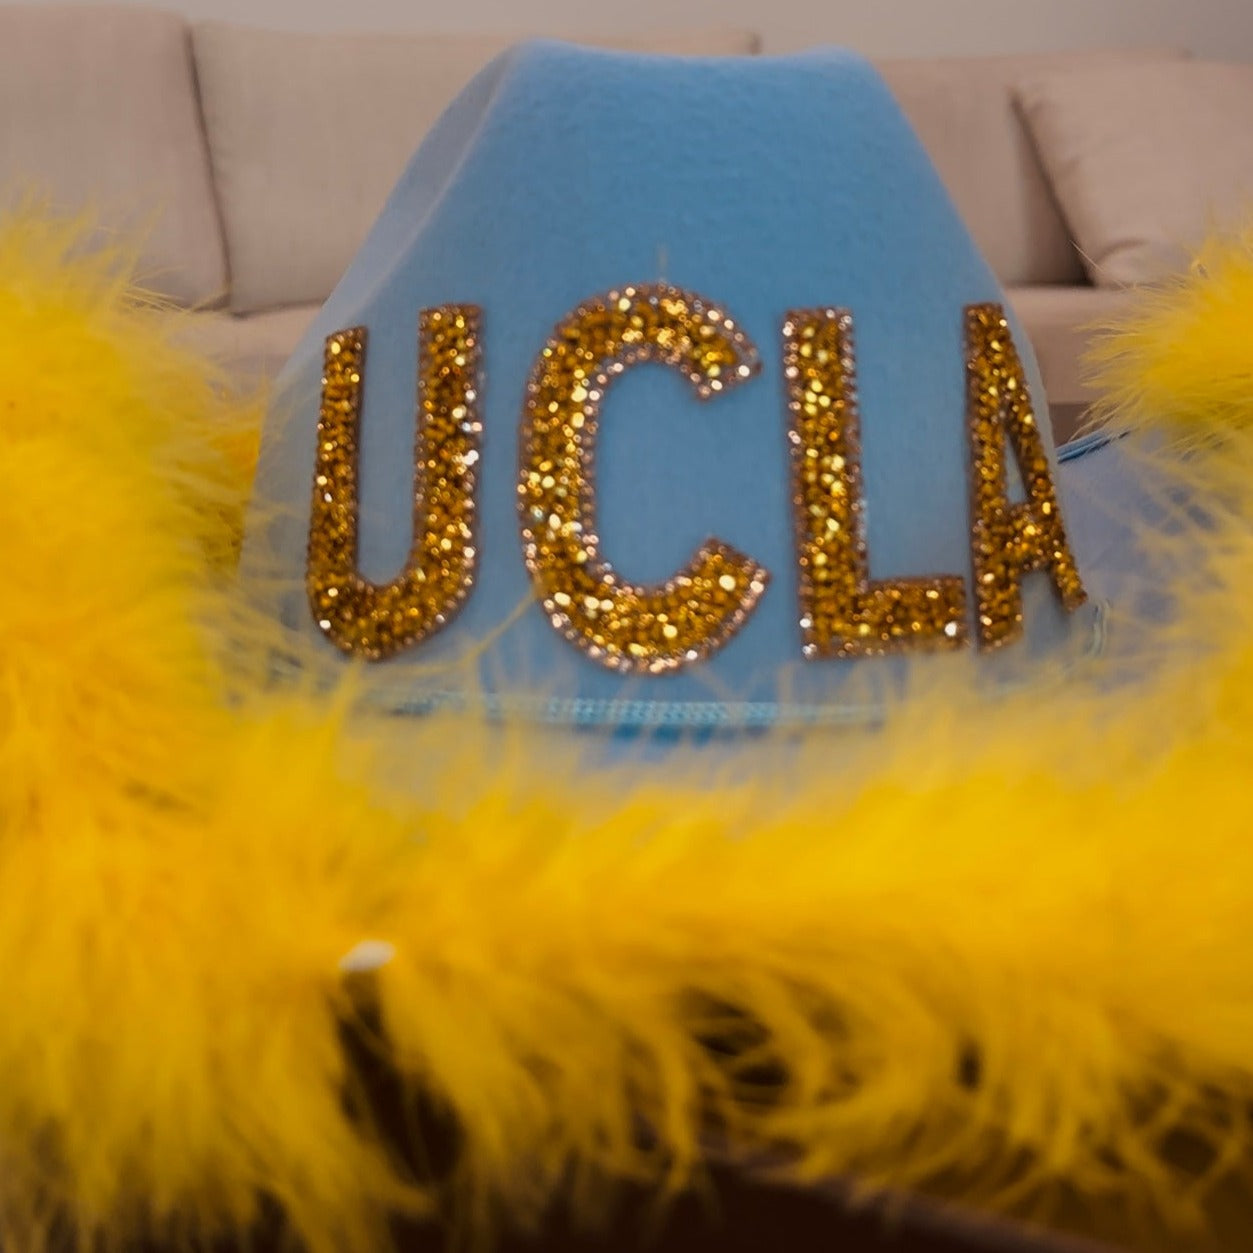 UCLA Build Your Own Cowboy Hat